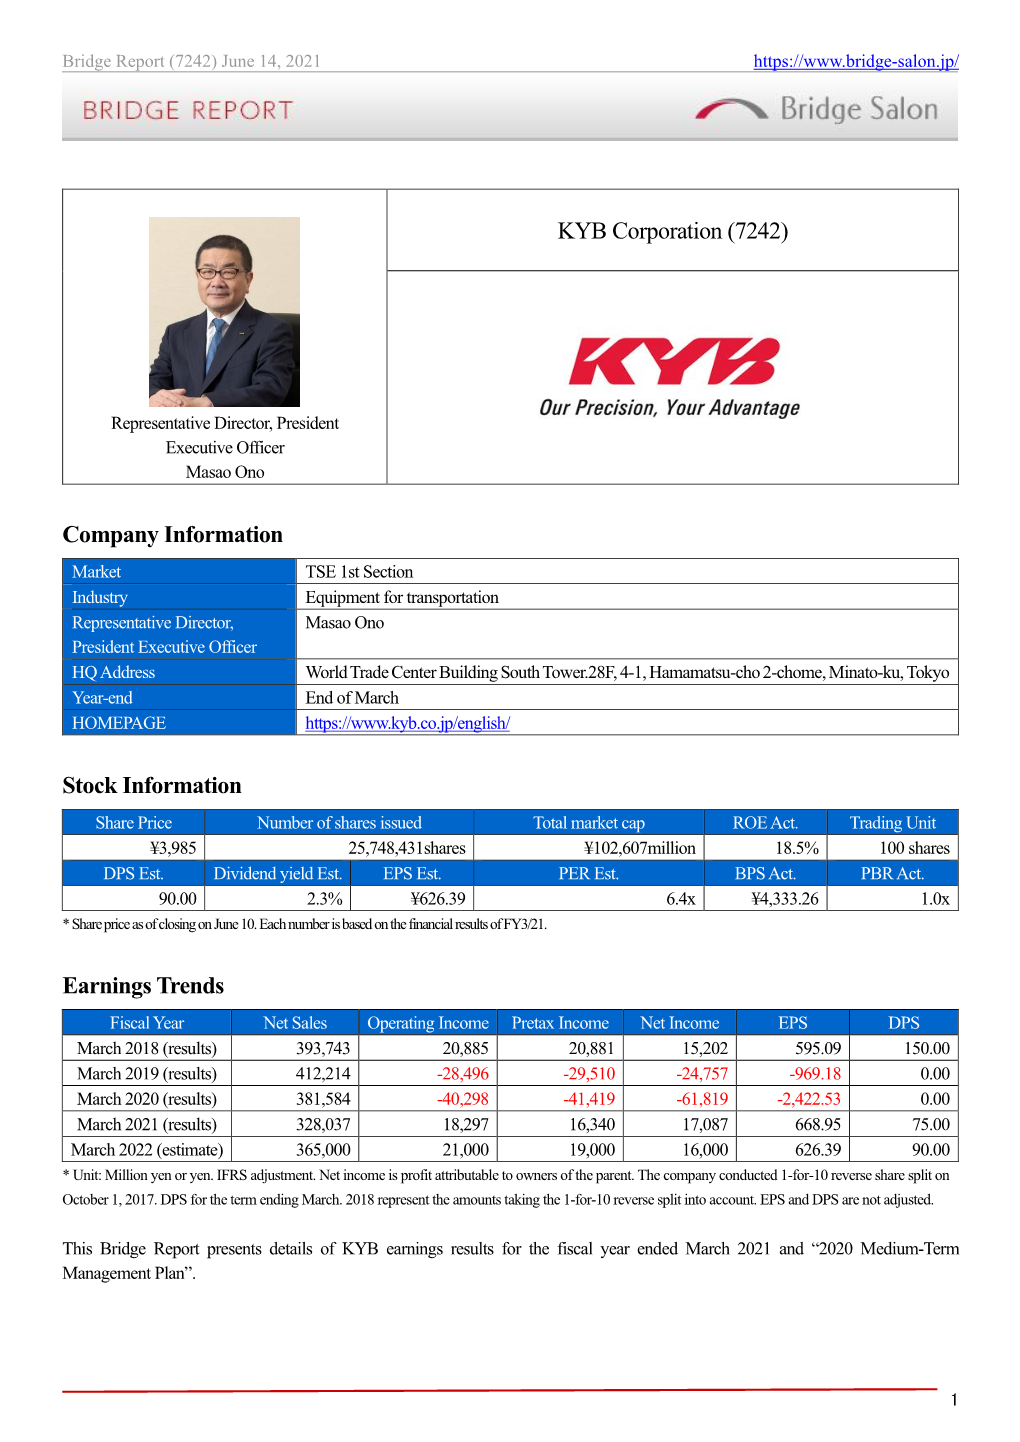 KYB Corporation (7242) Company Information Stock Information